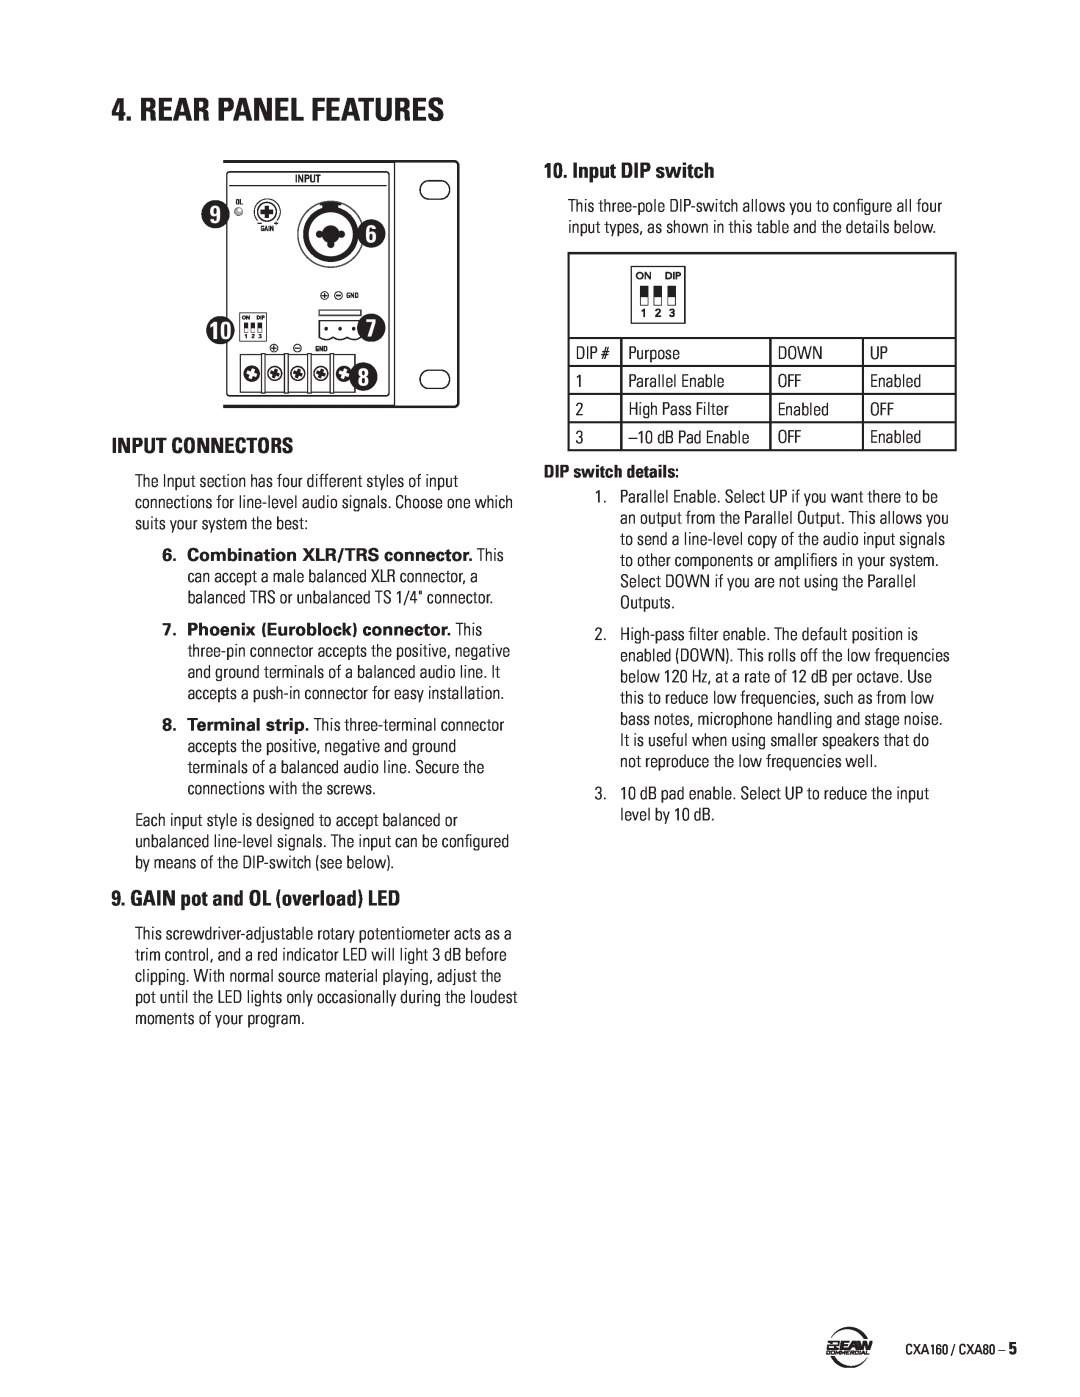 EAW CXA160 / CXA80 instruction manual Rear Panel Features, Input Connectors, GAIN pot and OL overload LED, Input DIP switch 